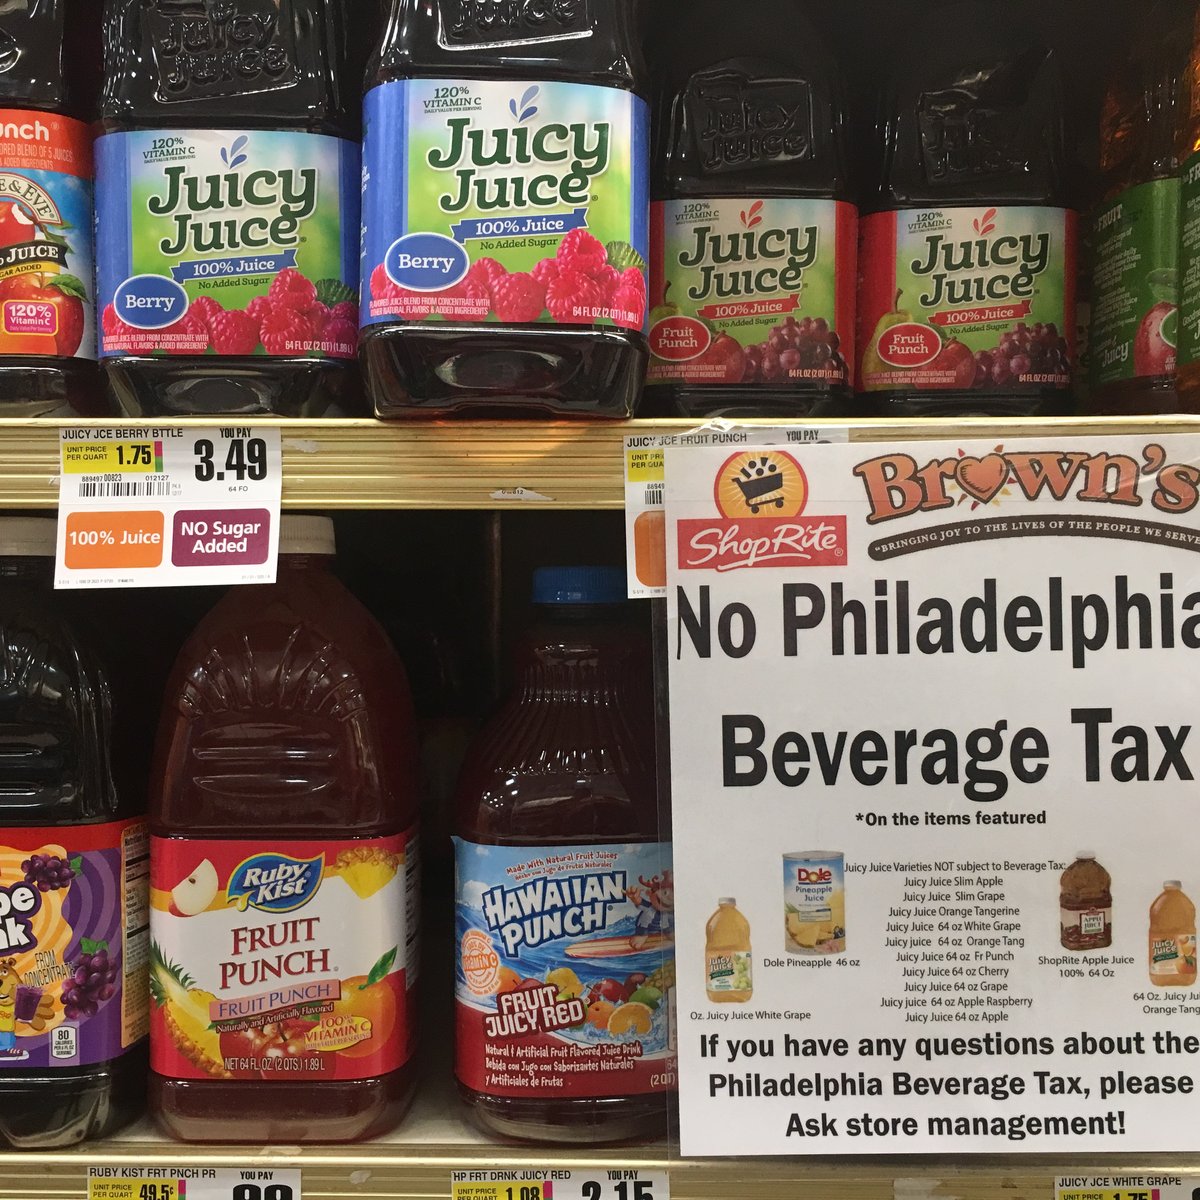 West Philadelphia ShopRite closes, cites soda tax - 6abc Philadelphia